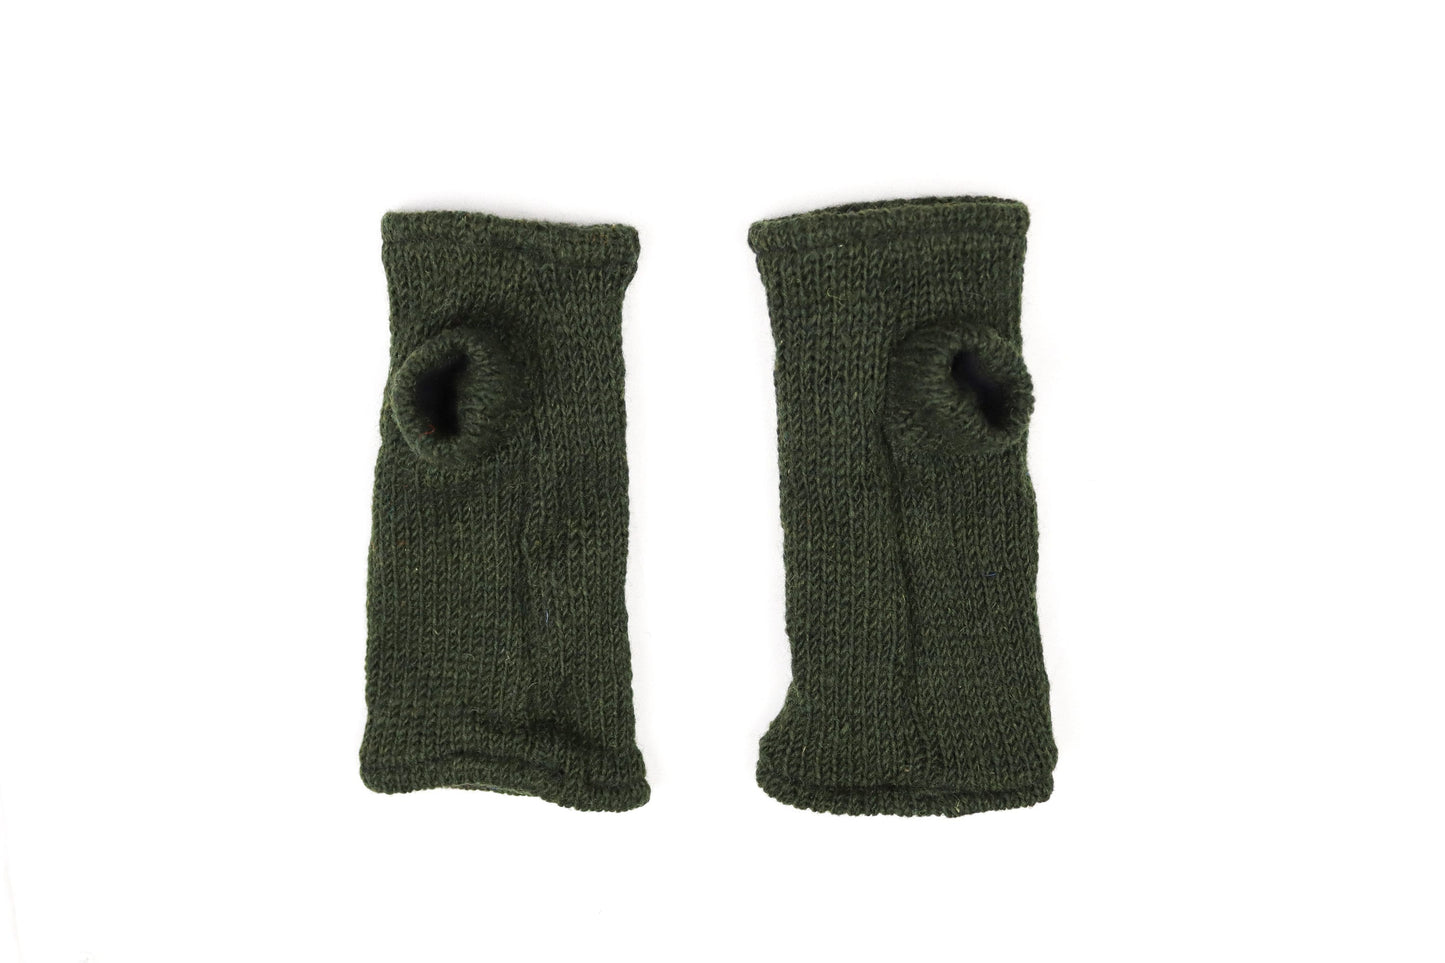 Fleece Lined Knitted Wrist Warmers - Dark Green - Bare Canvas